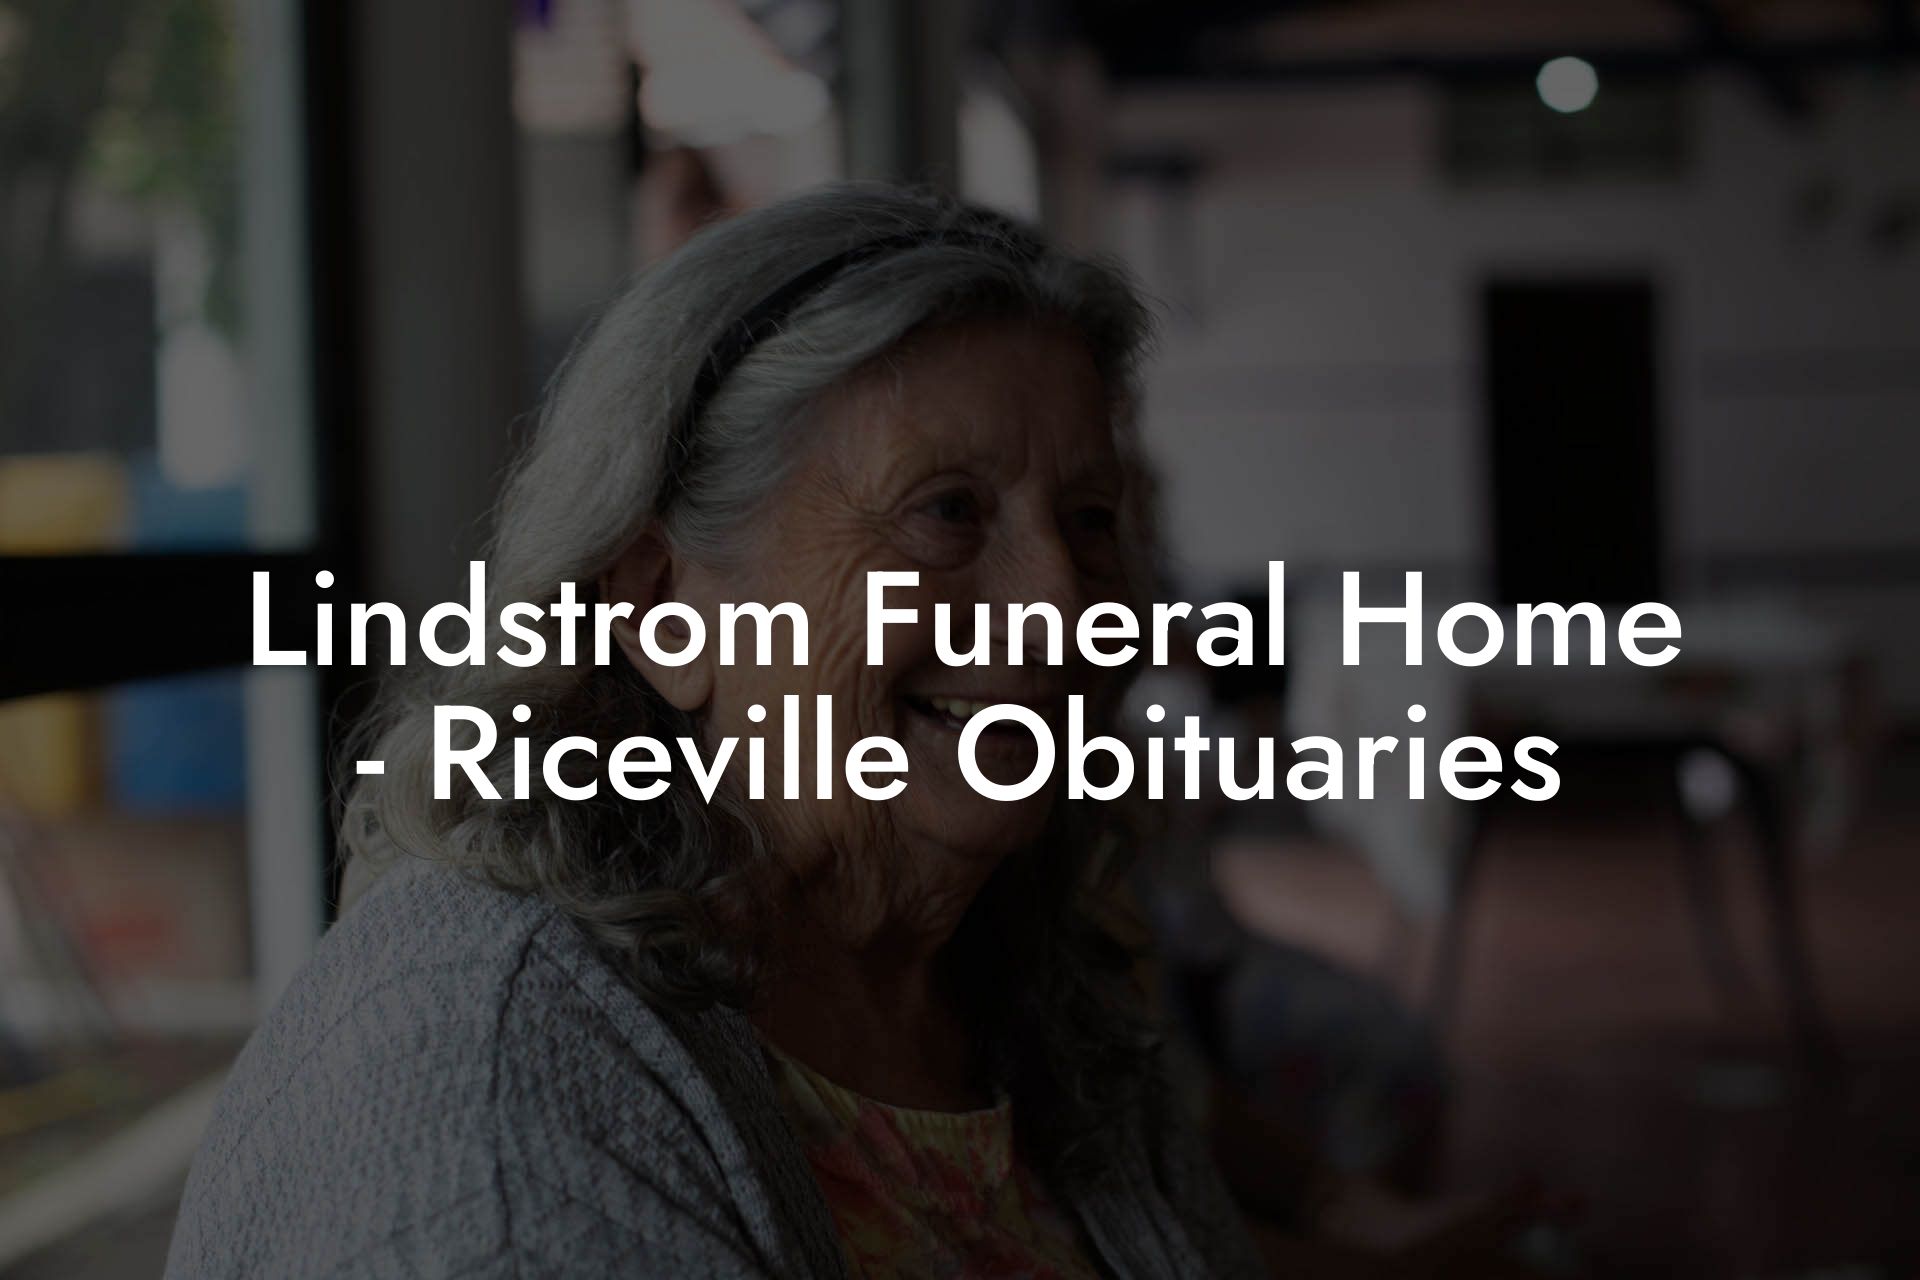 Lindstrom Funeral Home - Riceville Obituaries